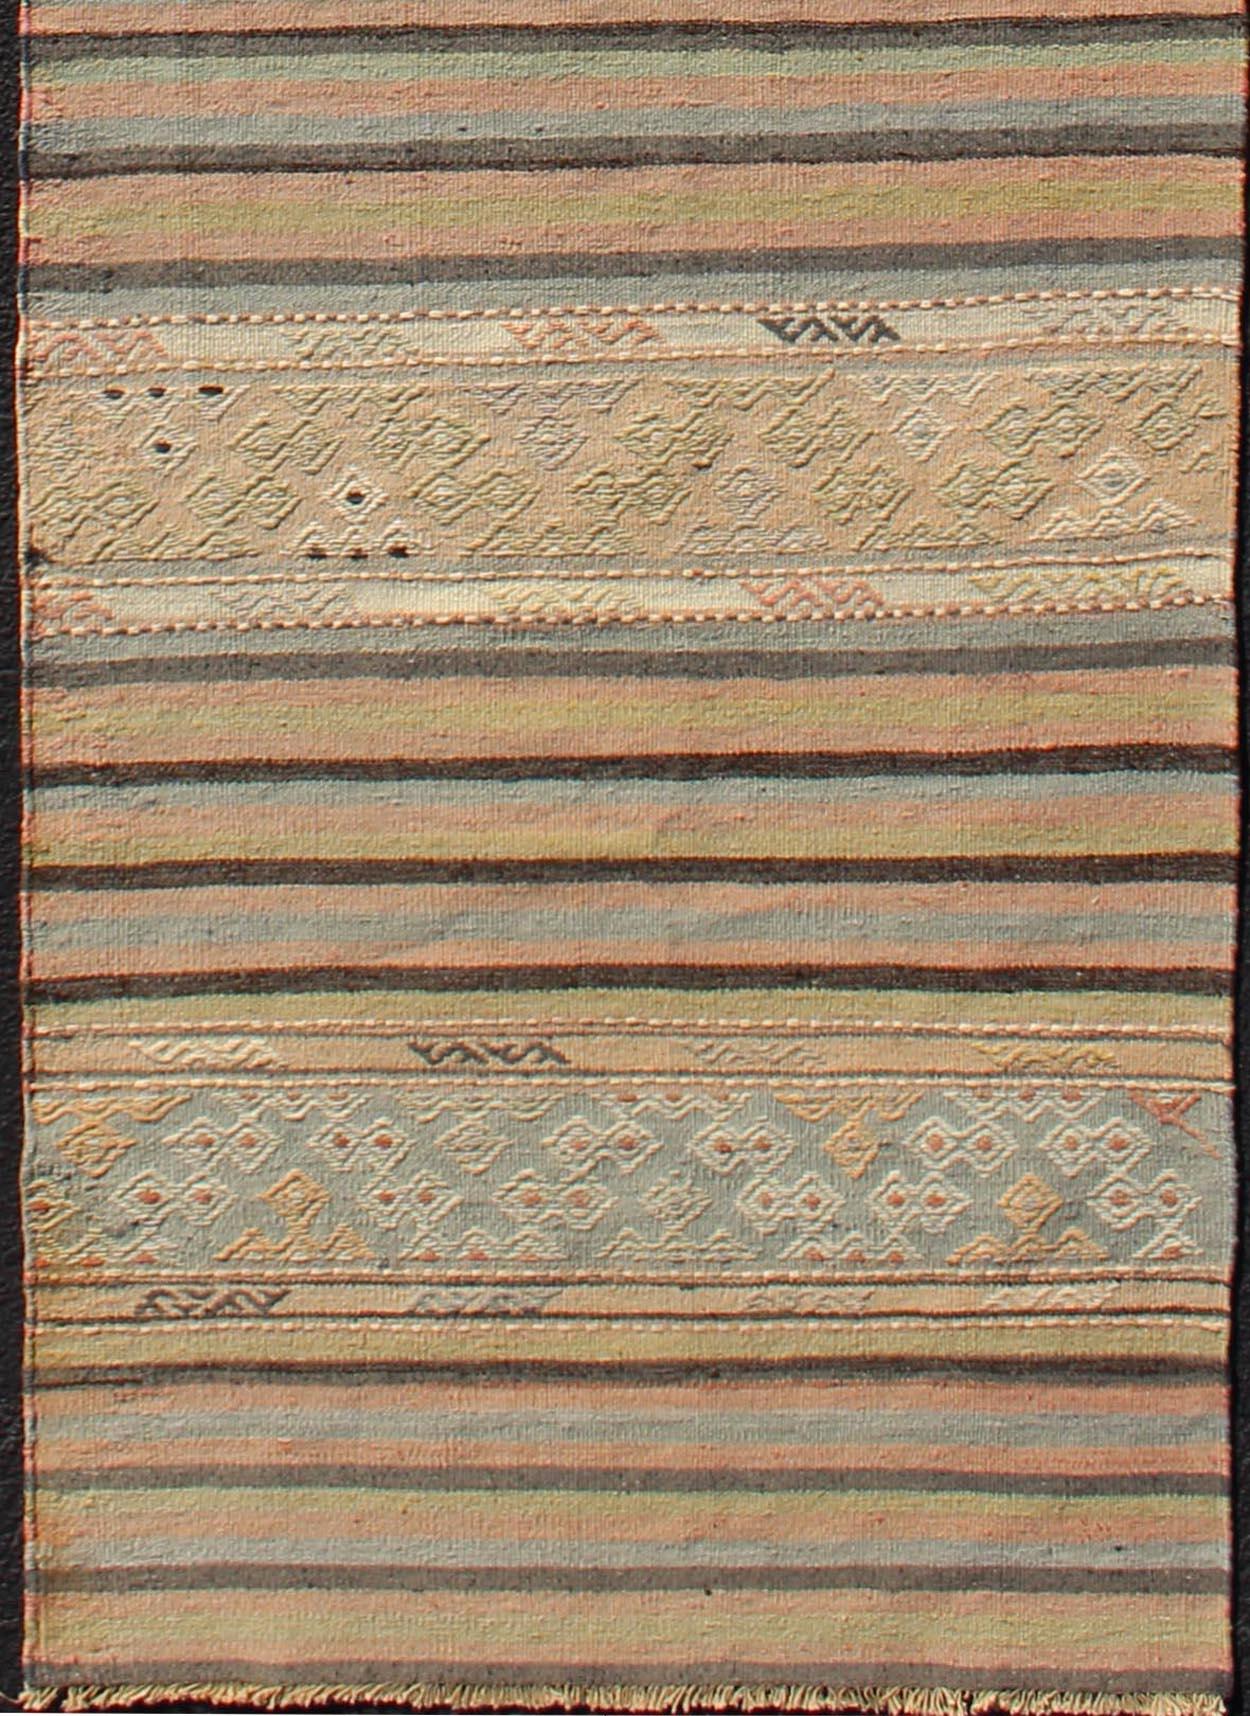 Hand-Woven Stripe Vintage Turkish Kilim Flat-Weave Geometric Designed Runner For Sale